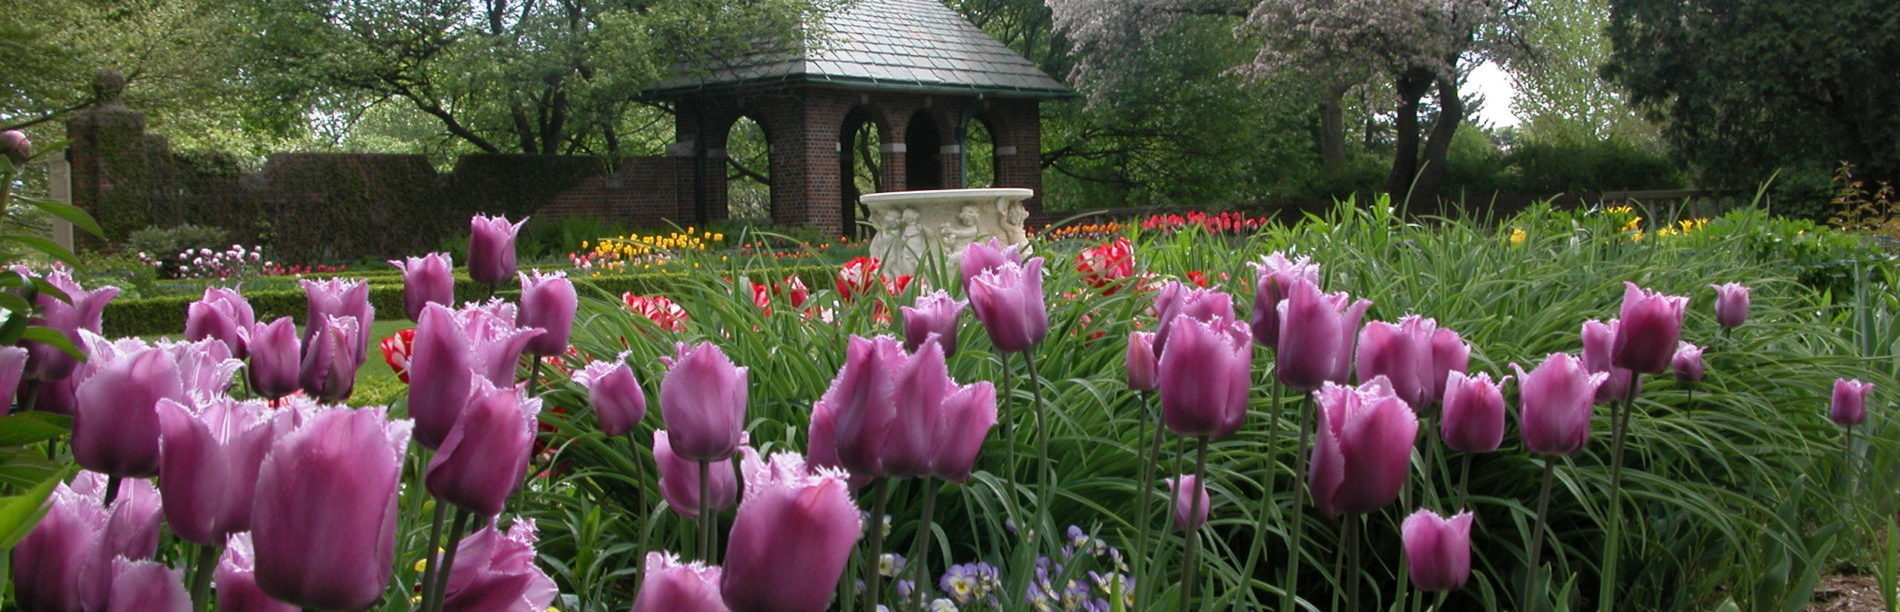 Tulips bloom in the perennial garden